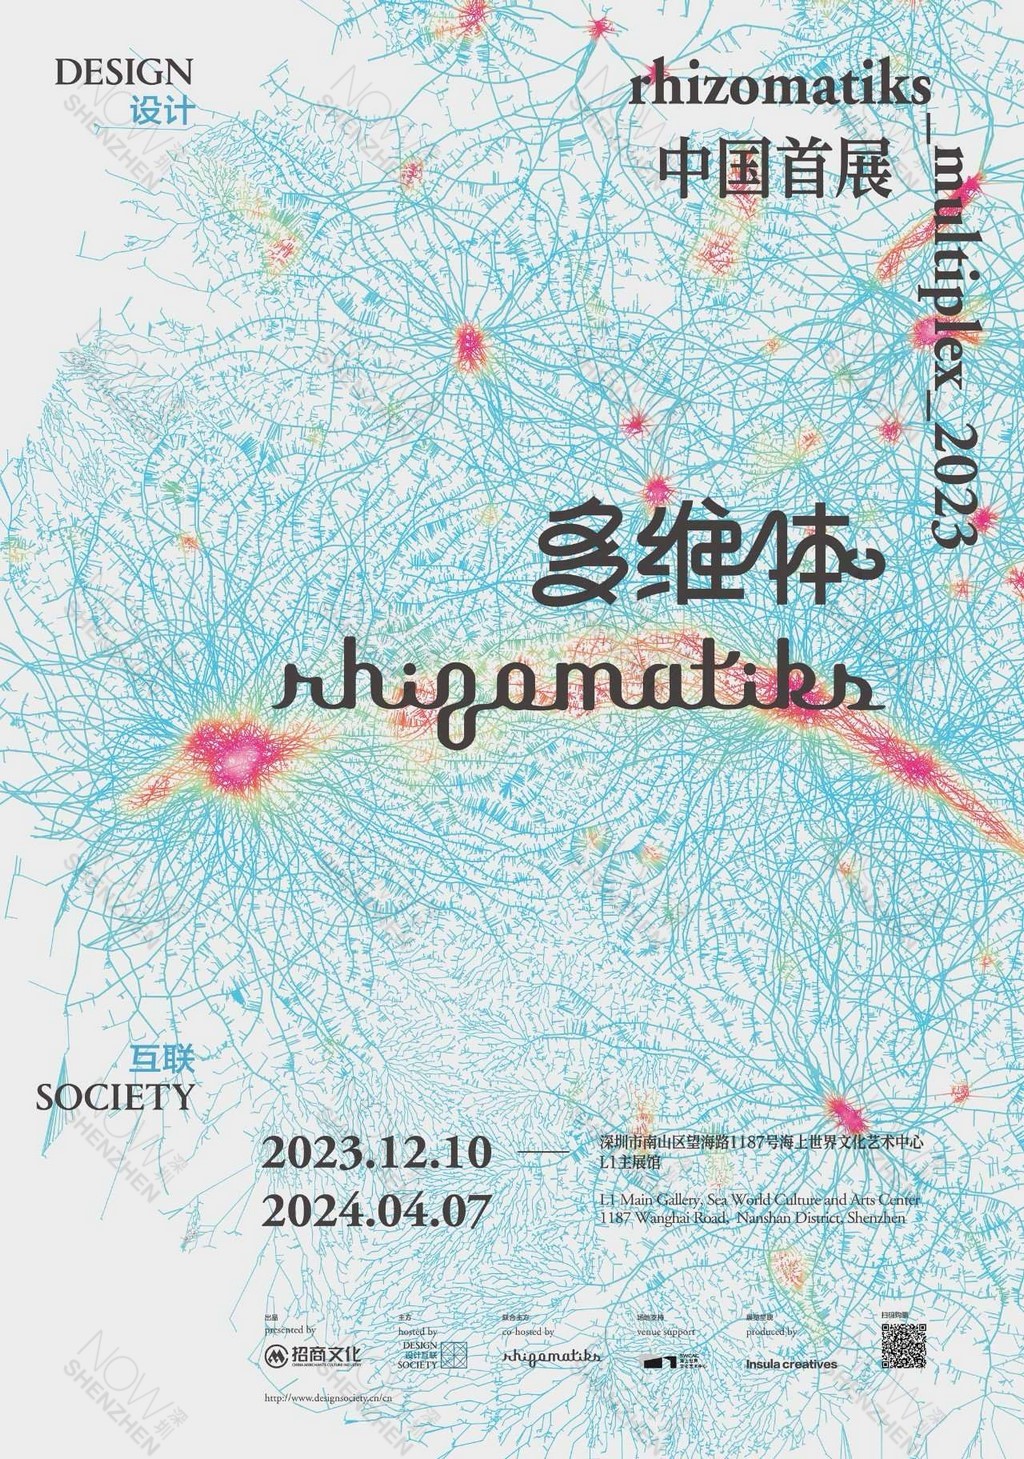 Rhizomatiks @ Sea World Culture and Arts Center – Nanshan